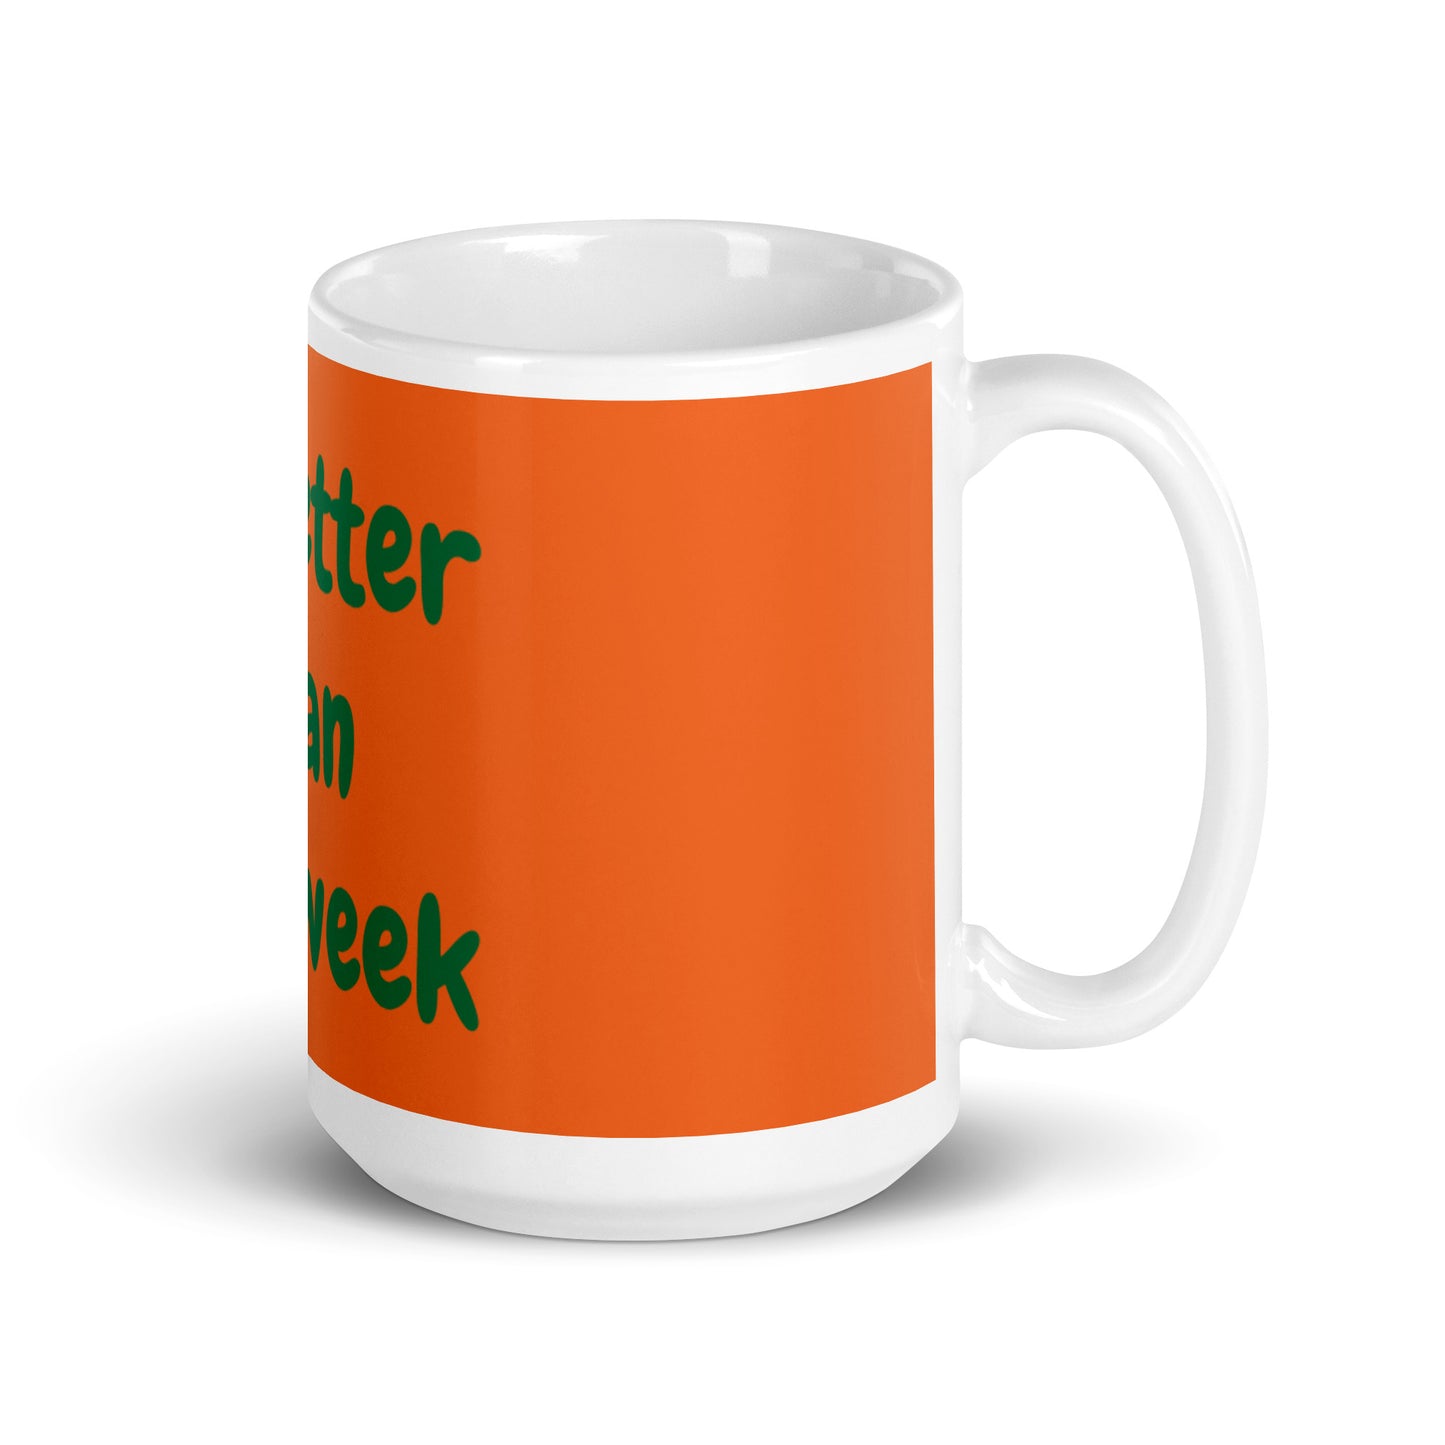 Orange White Glossy Mug - Be better than last week